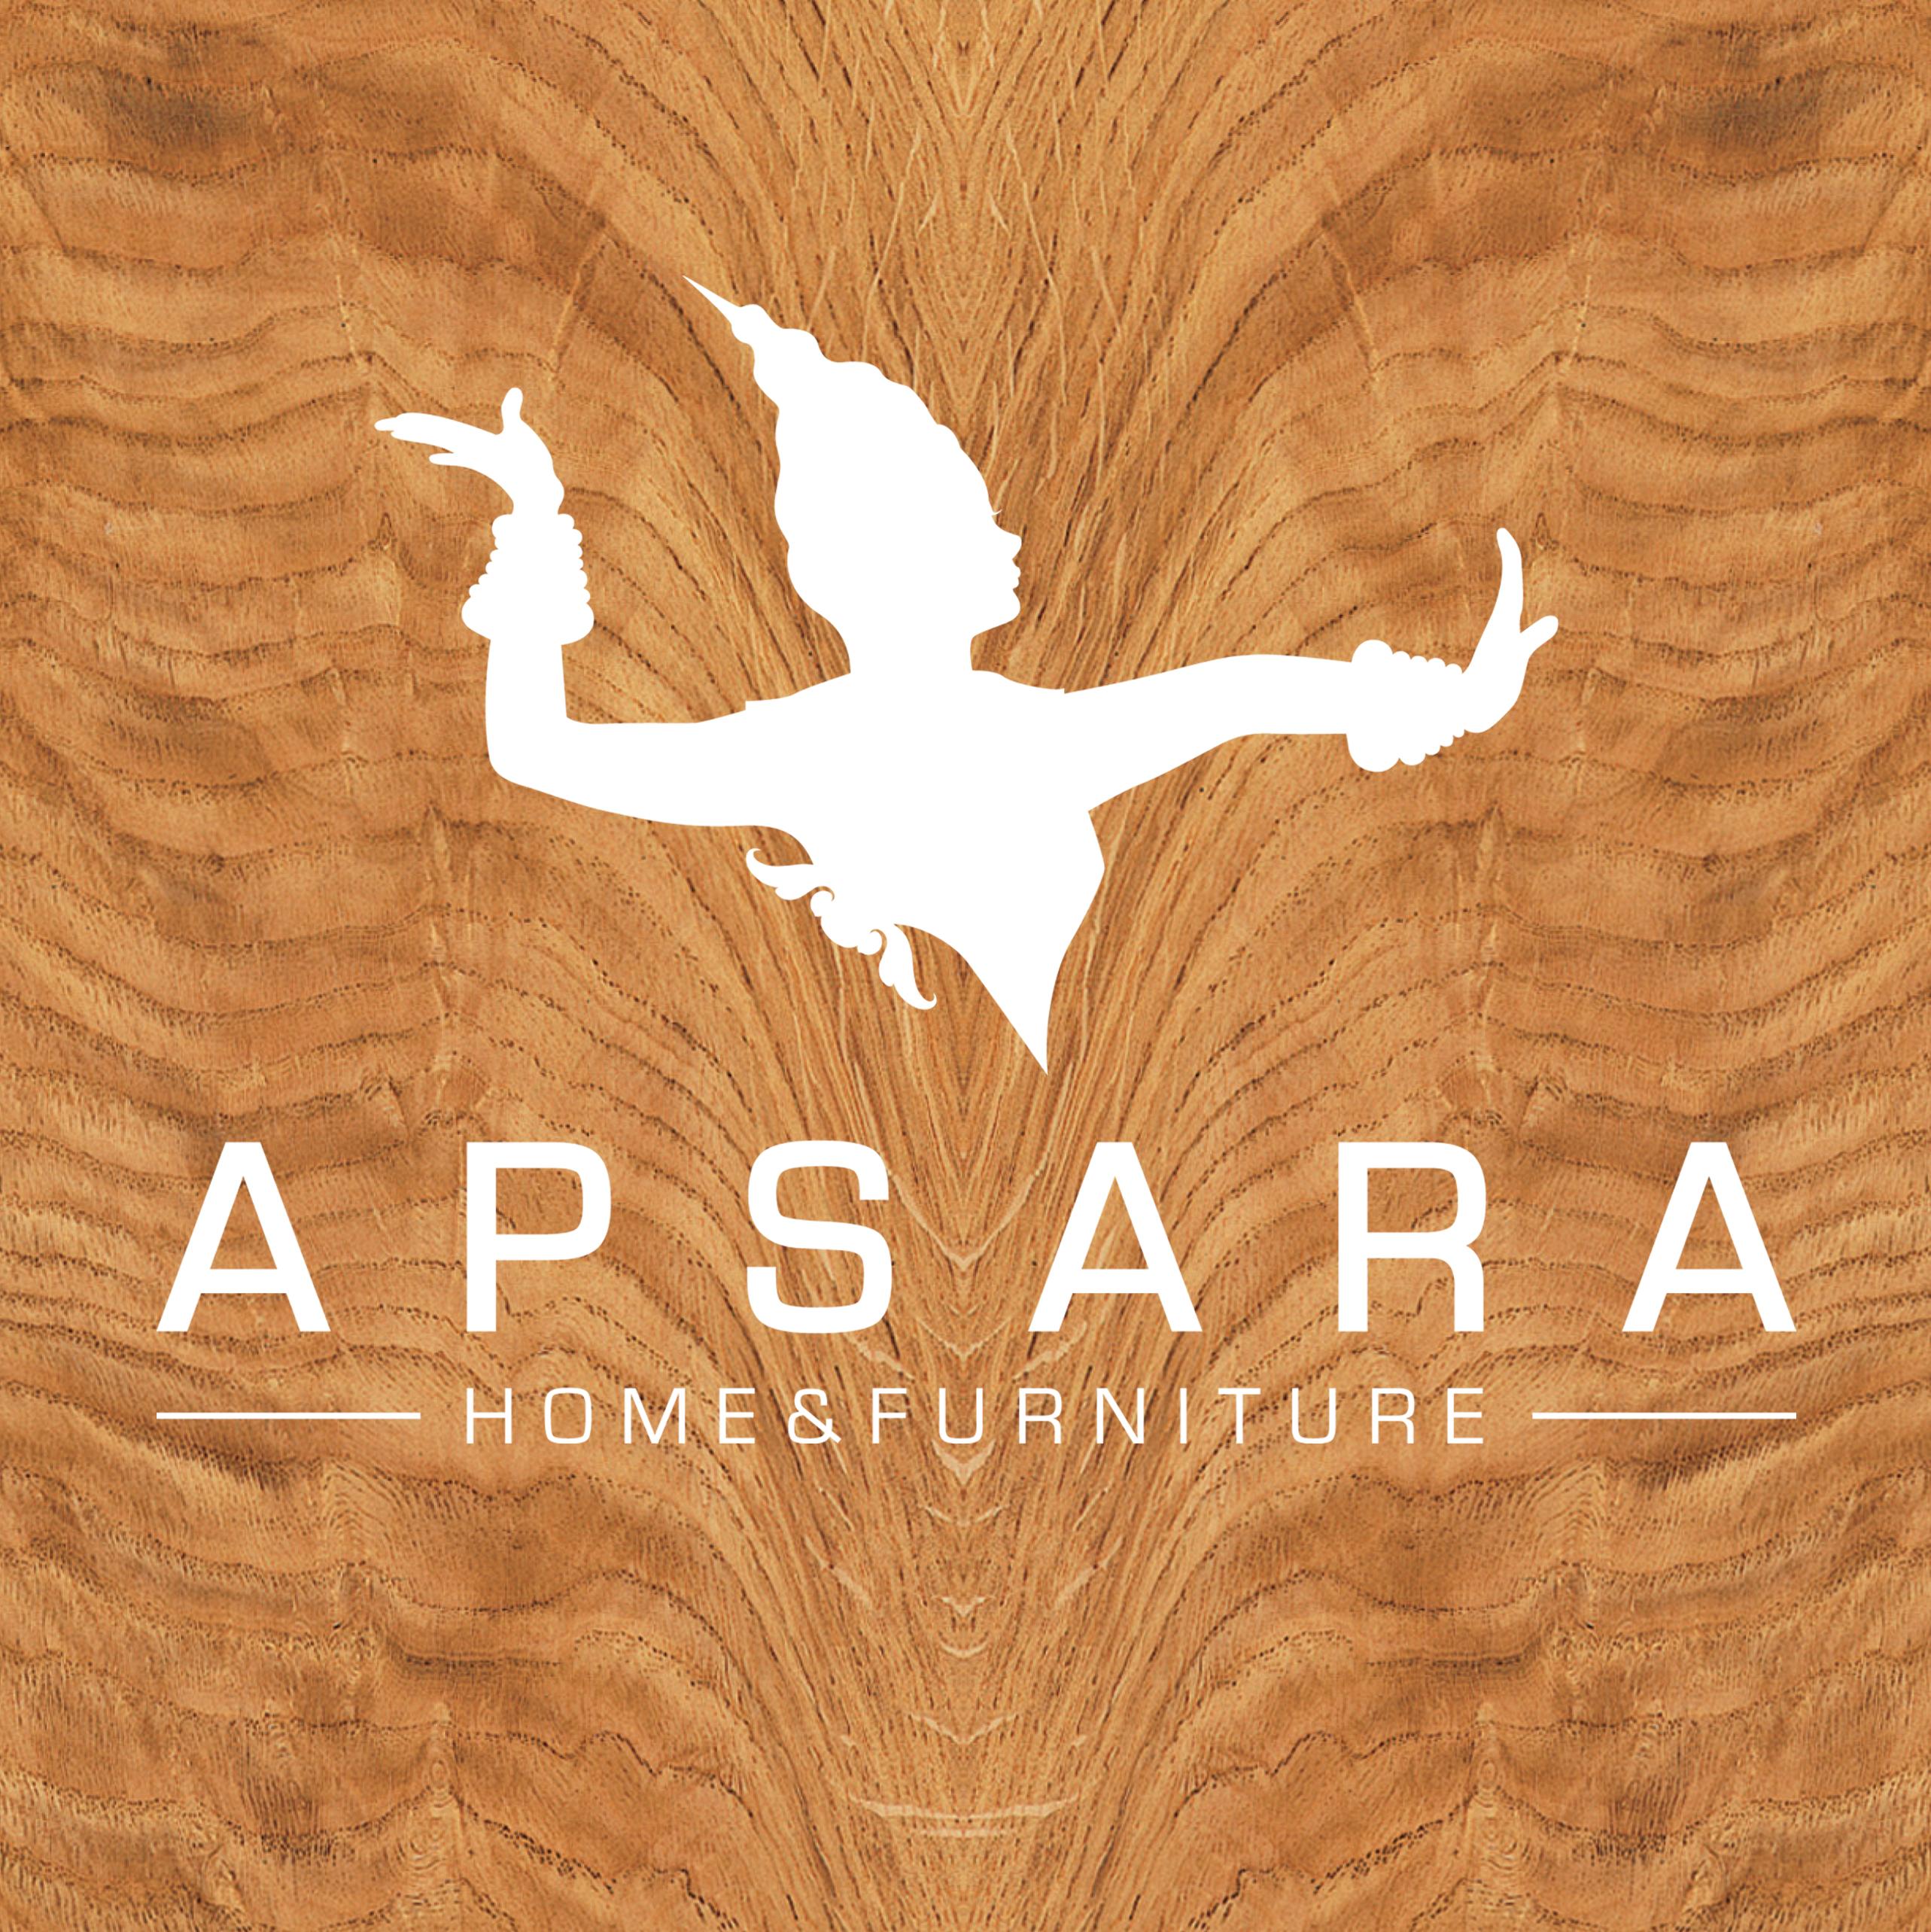 APSARA HOME & FURNITURE